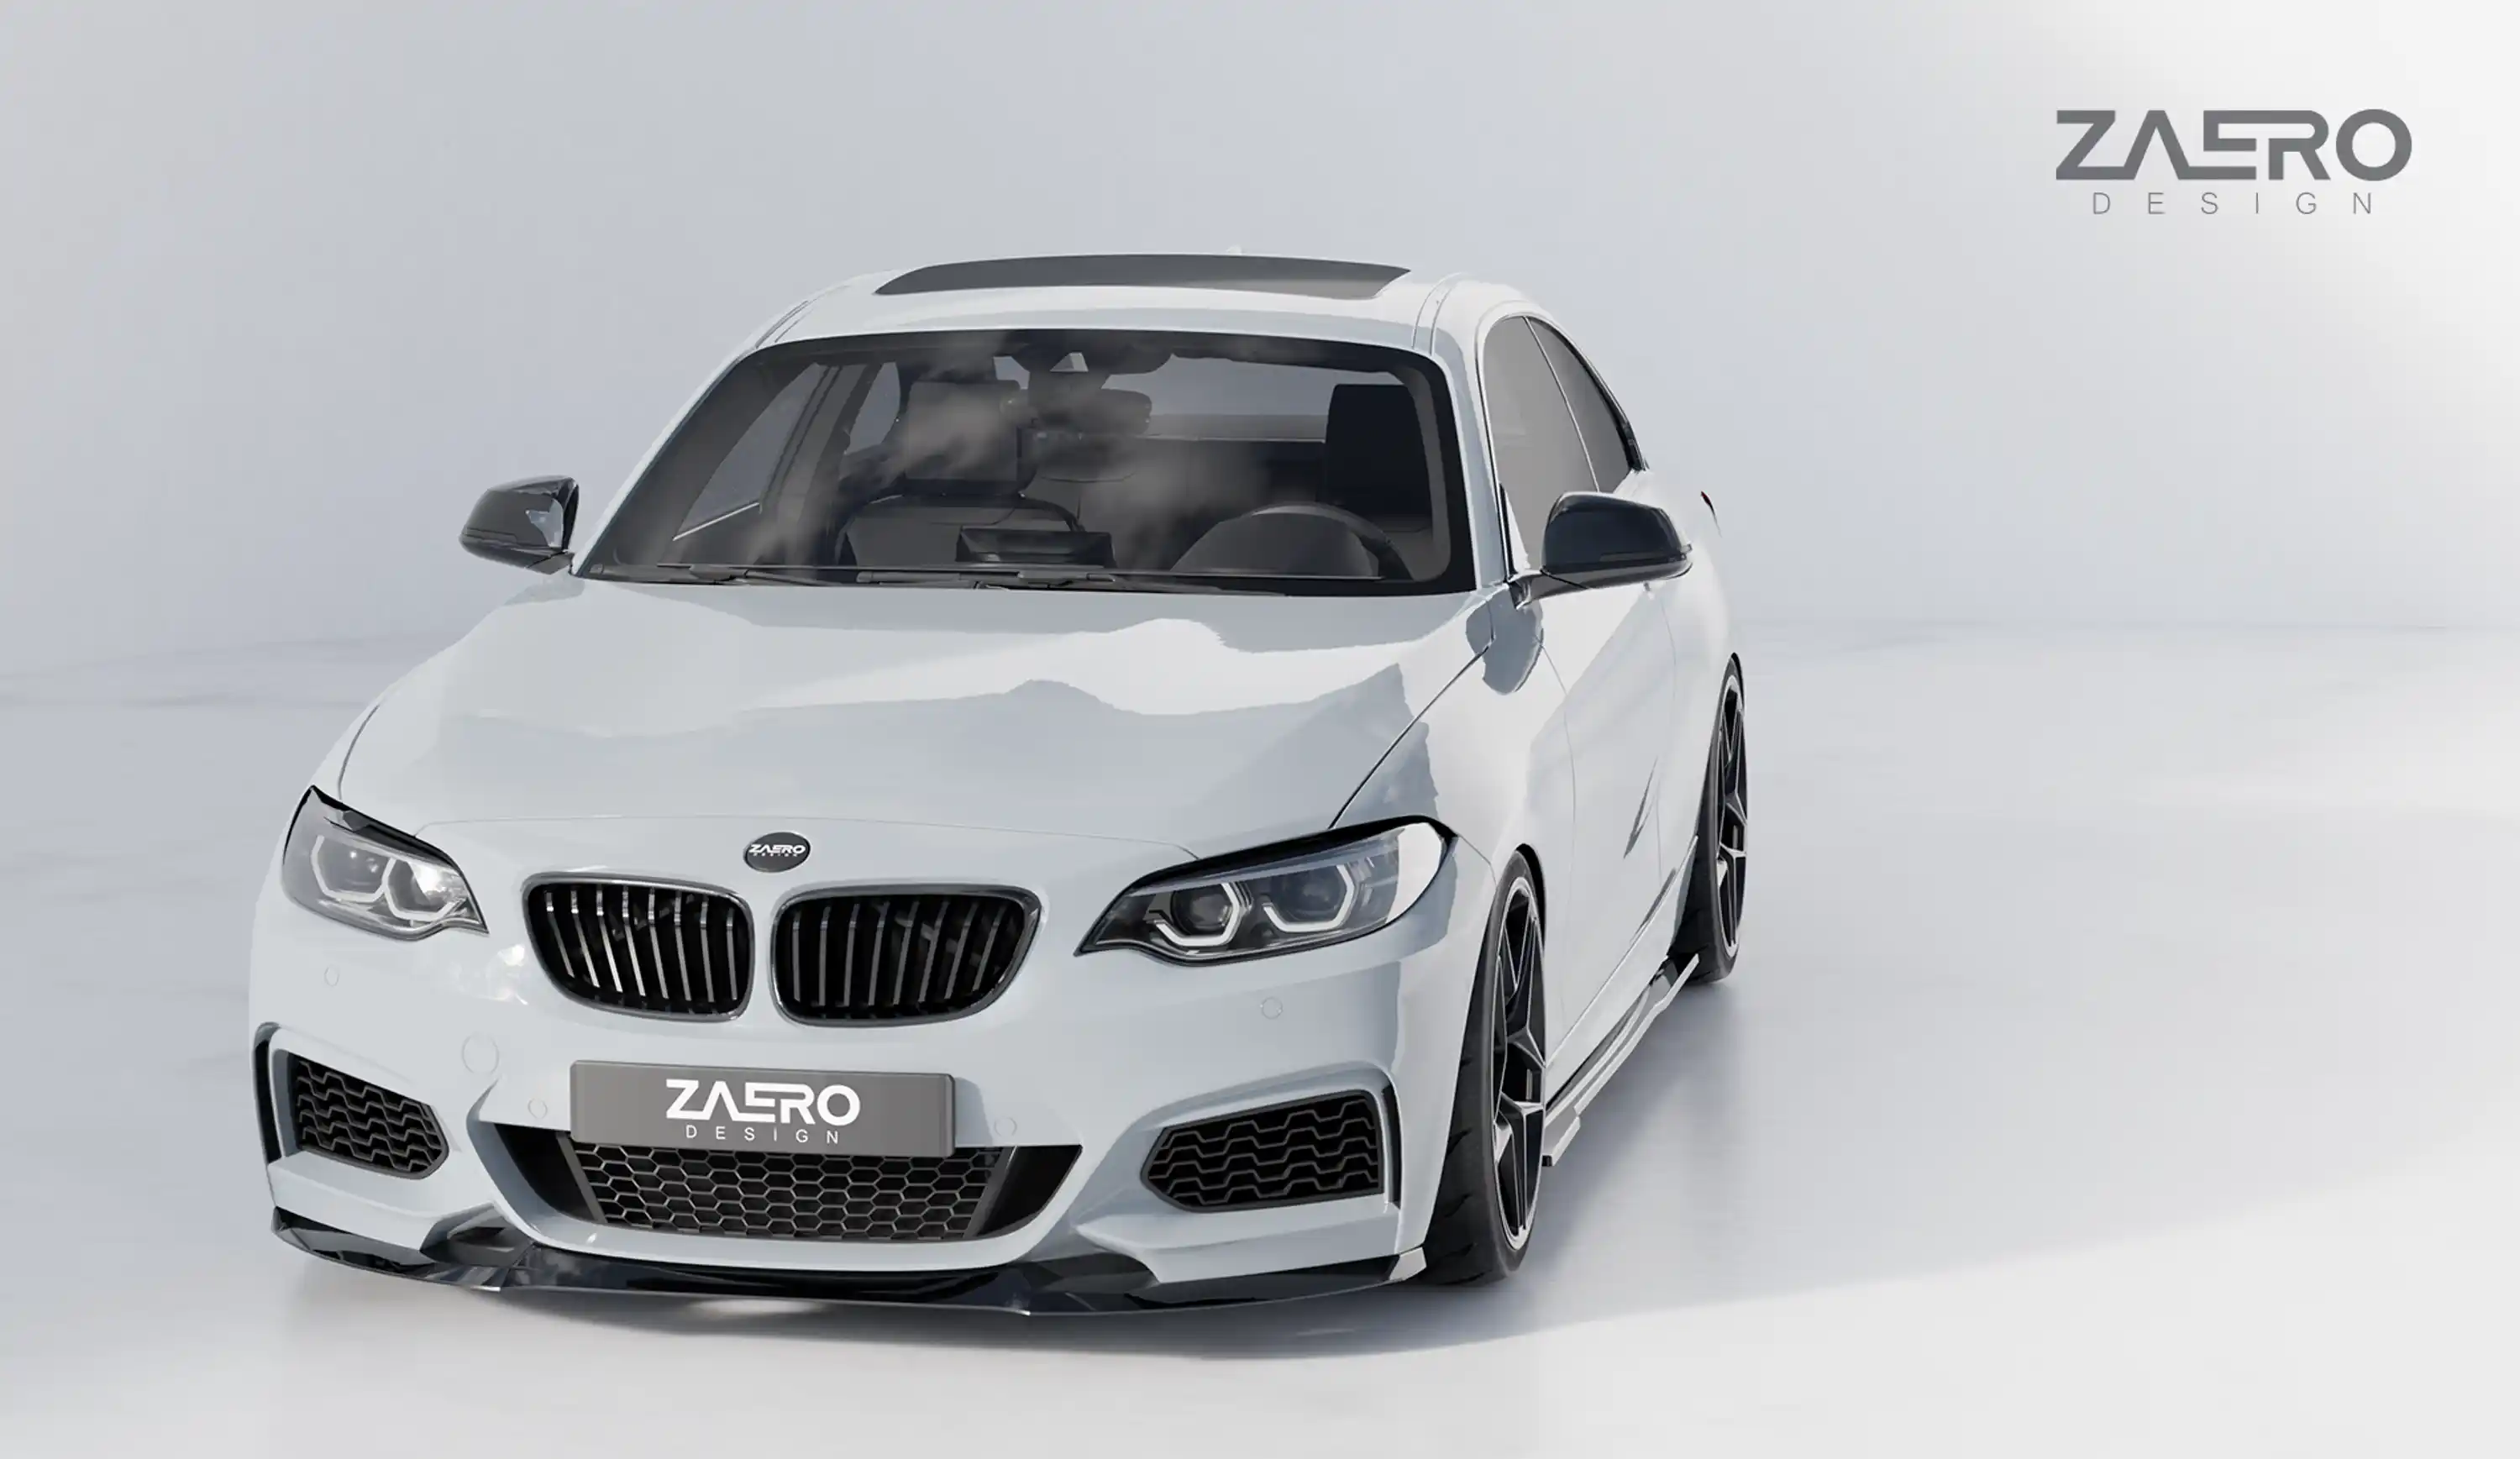 body kit by ZAERO DESIGN for BMW 2-Series F22 F23 M235 M240